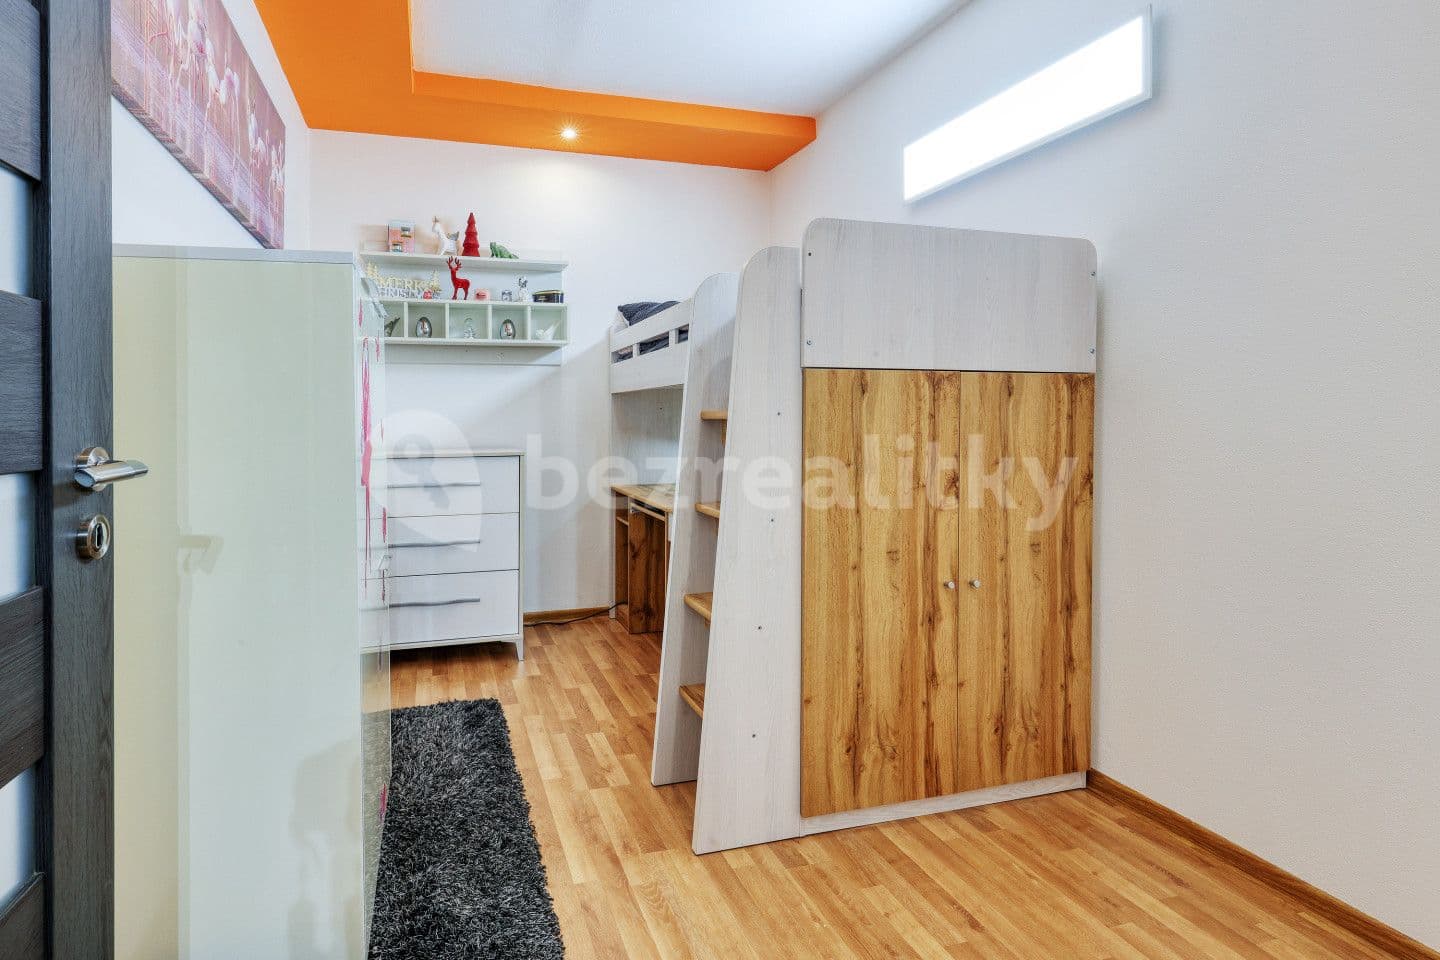 2 bedroom flat for sale, 61 m², Sídliště II, Nýrsko, Plzeňský Region